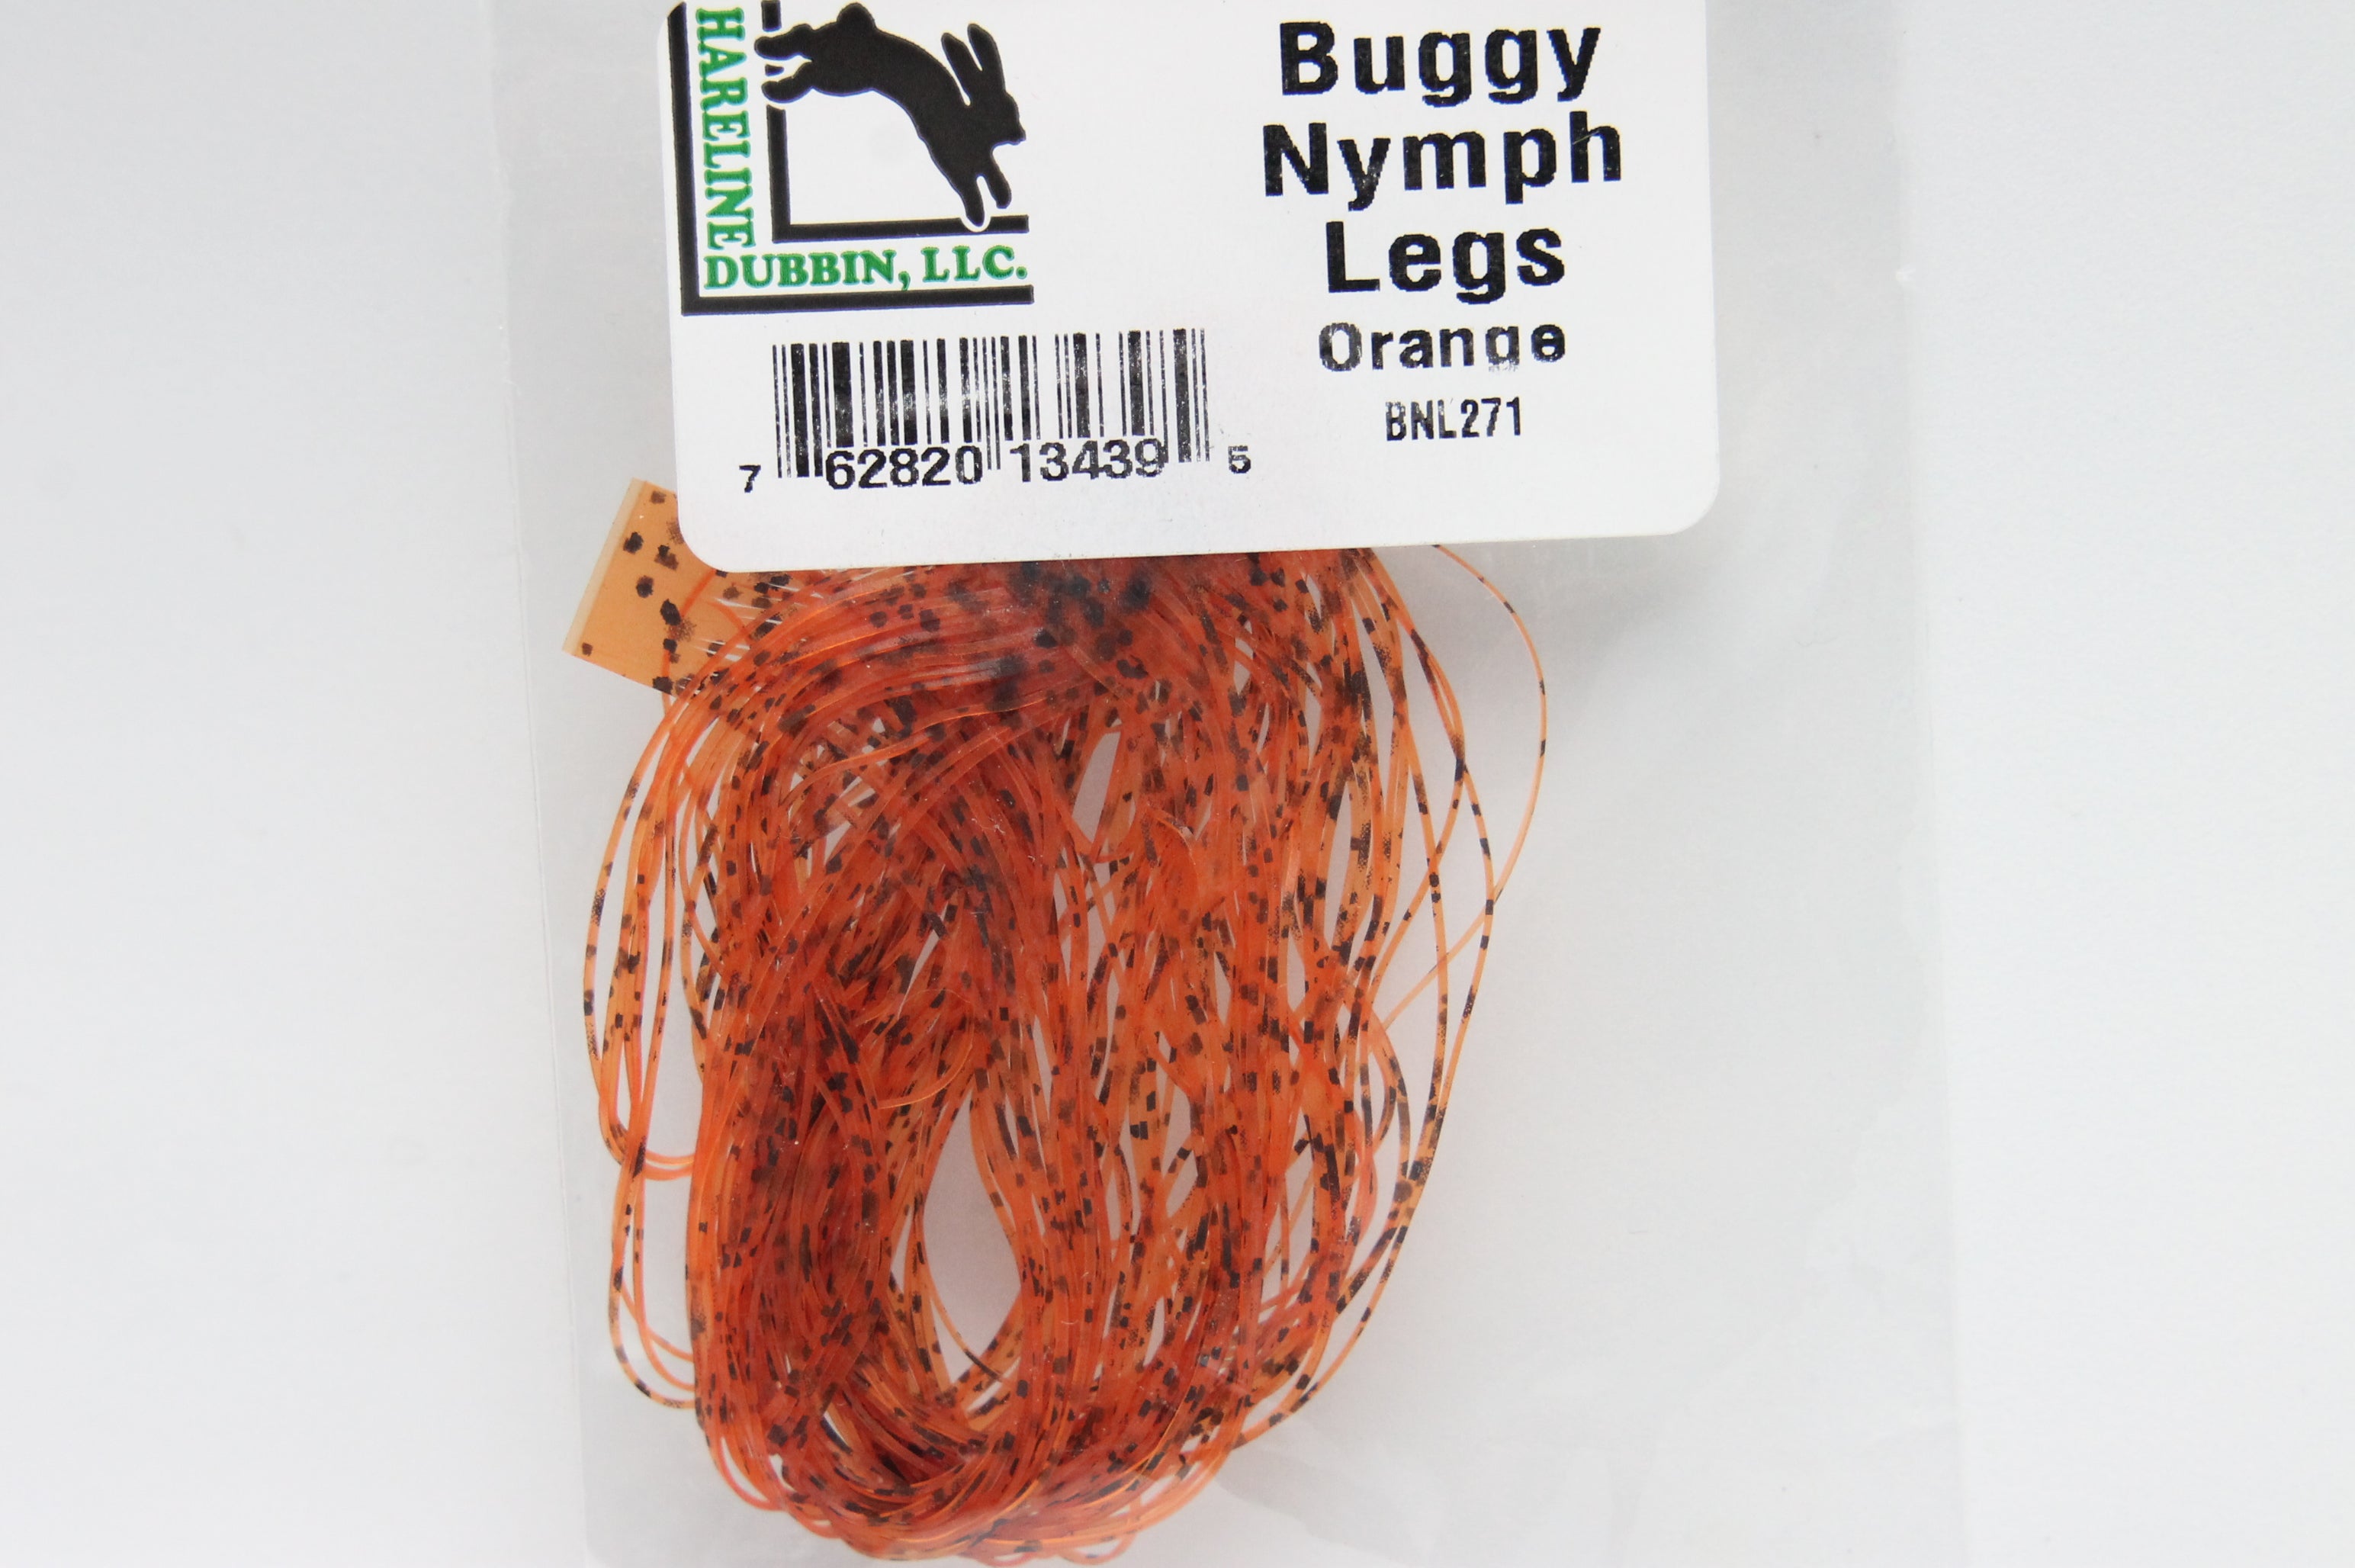 Buggy Nymph Legs